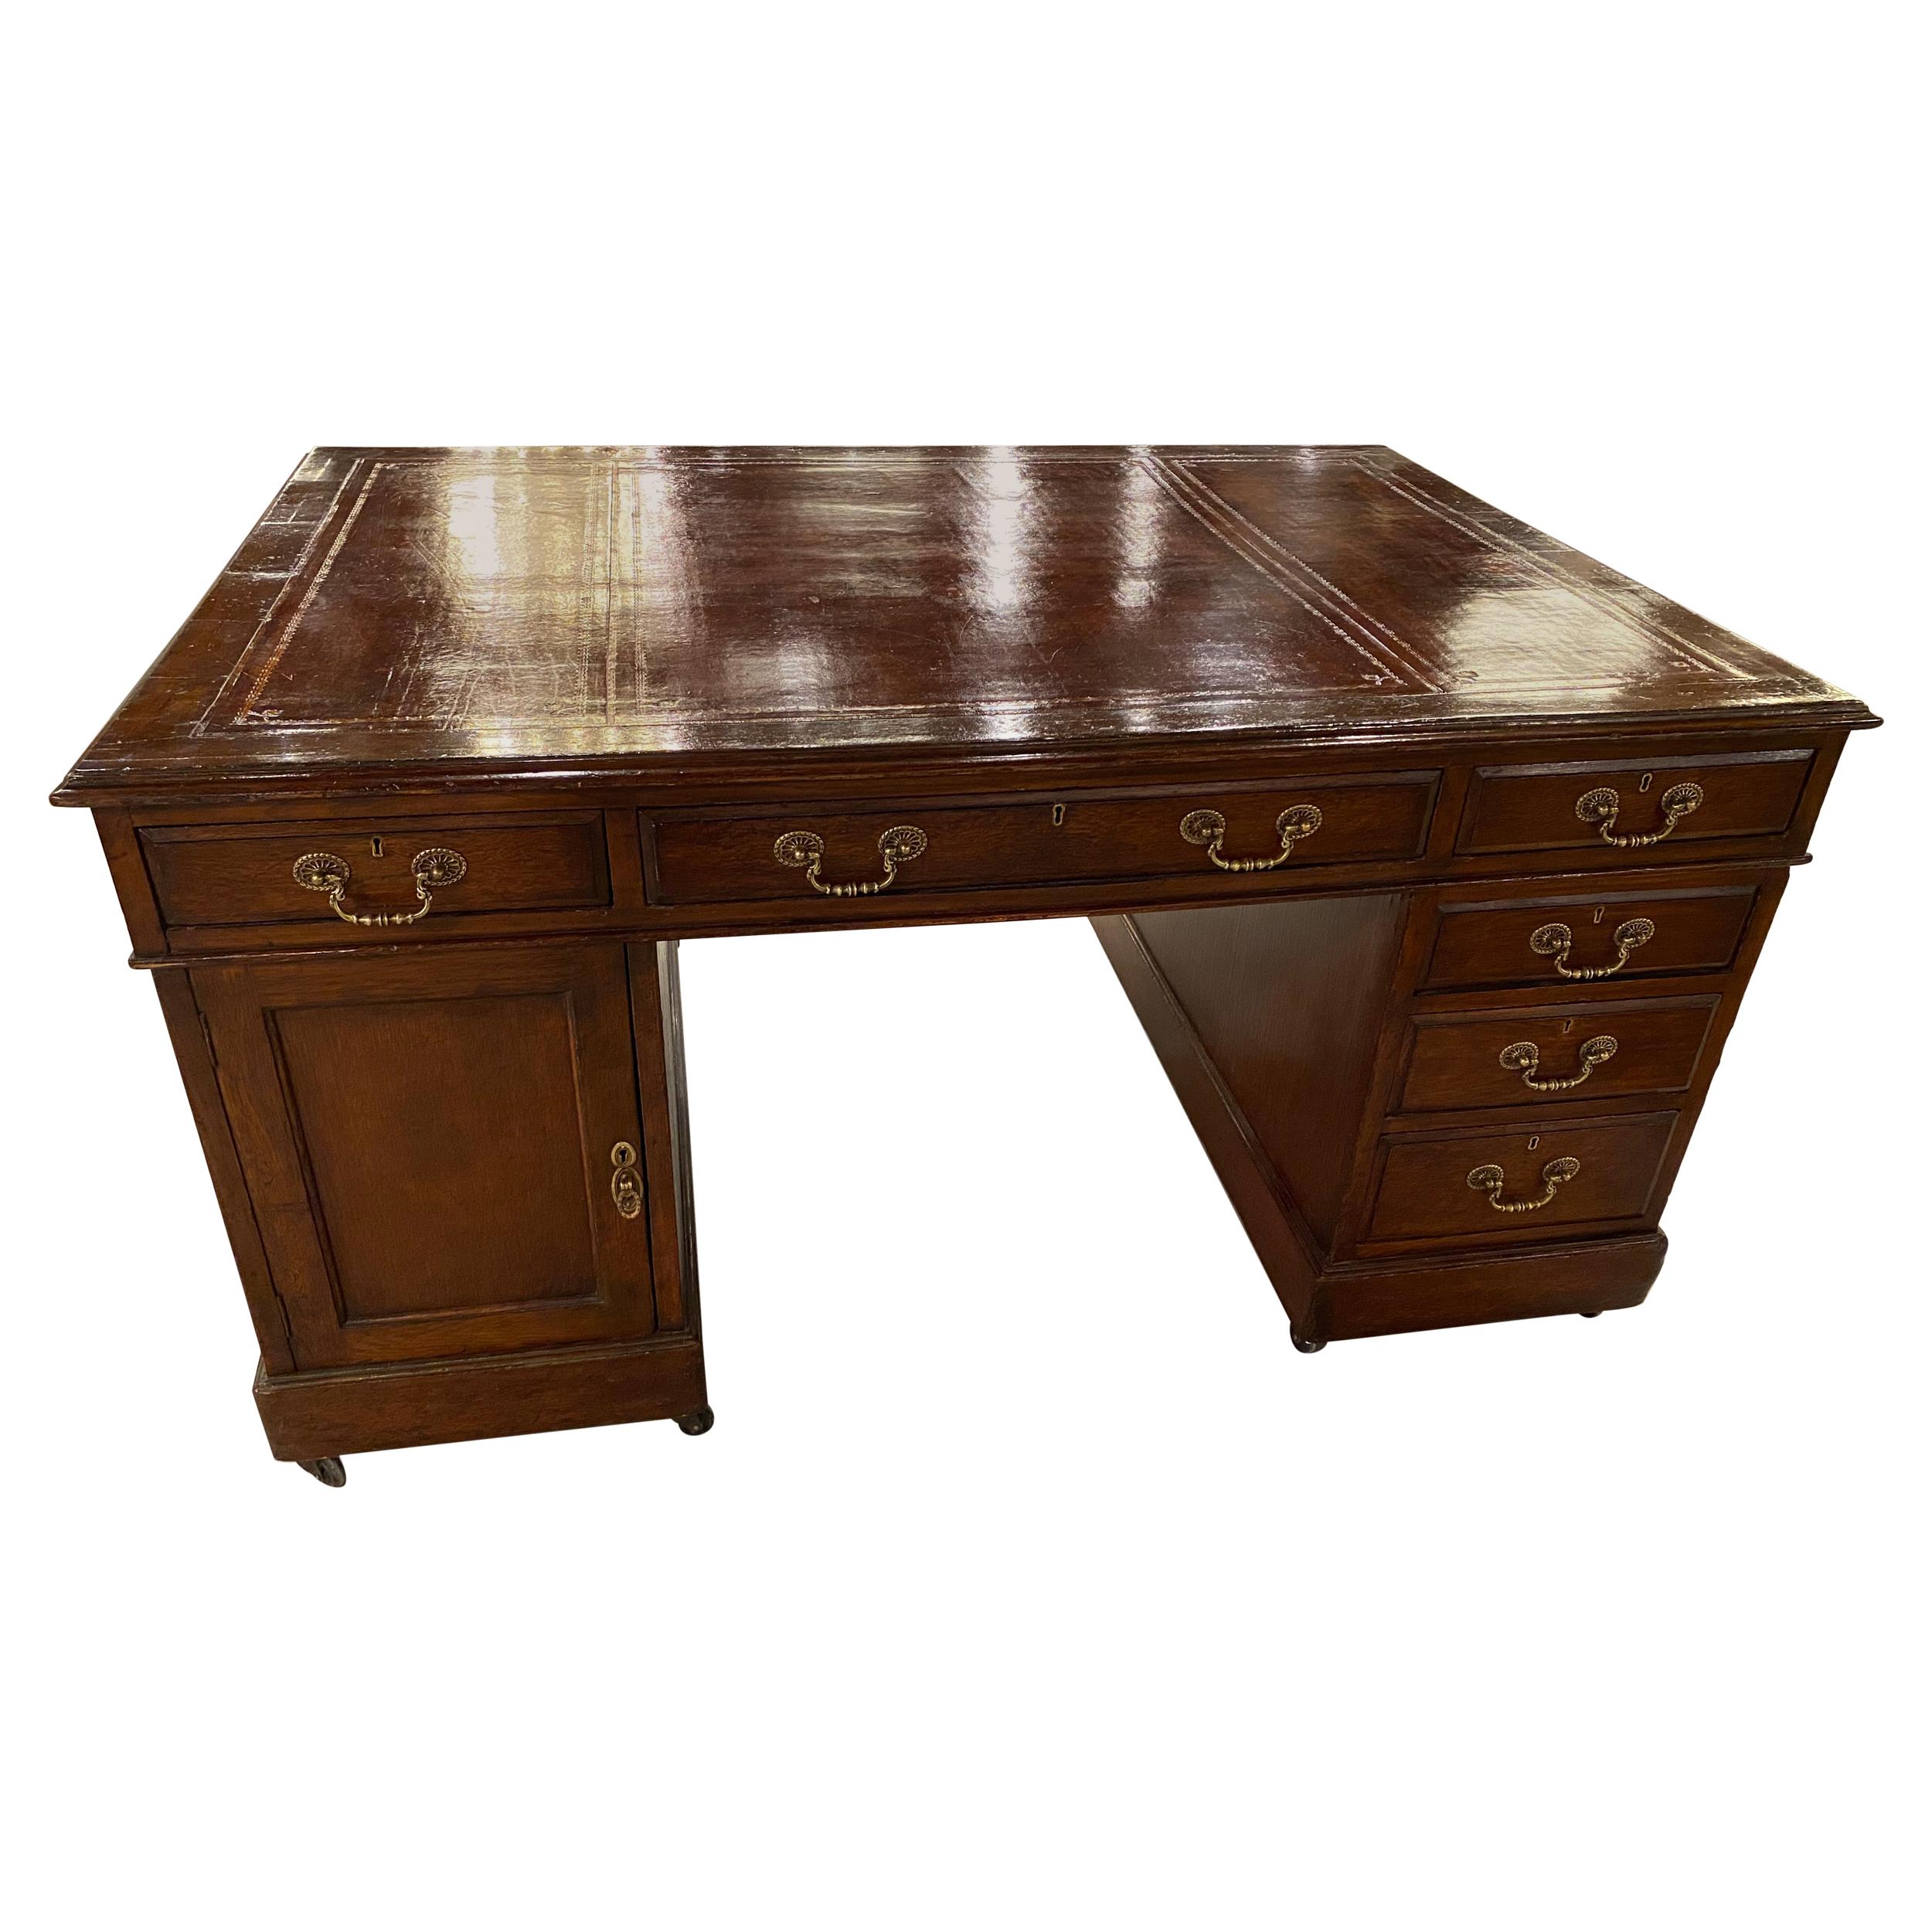 19th Century Oak Partners Desk, Leather Writing Surface, Brass Hardware